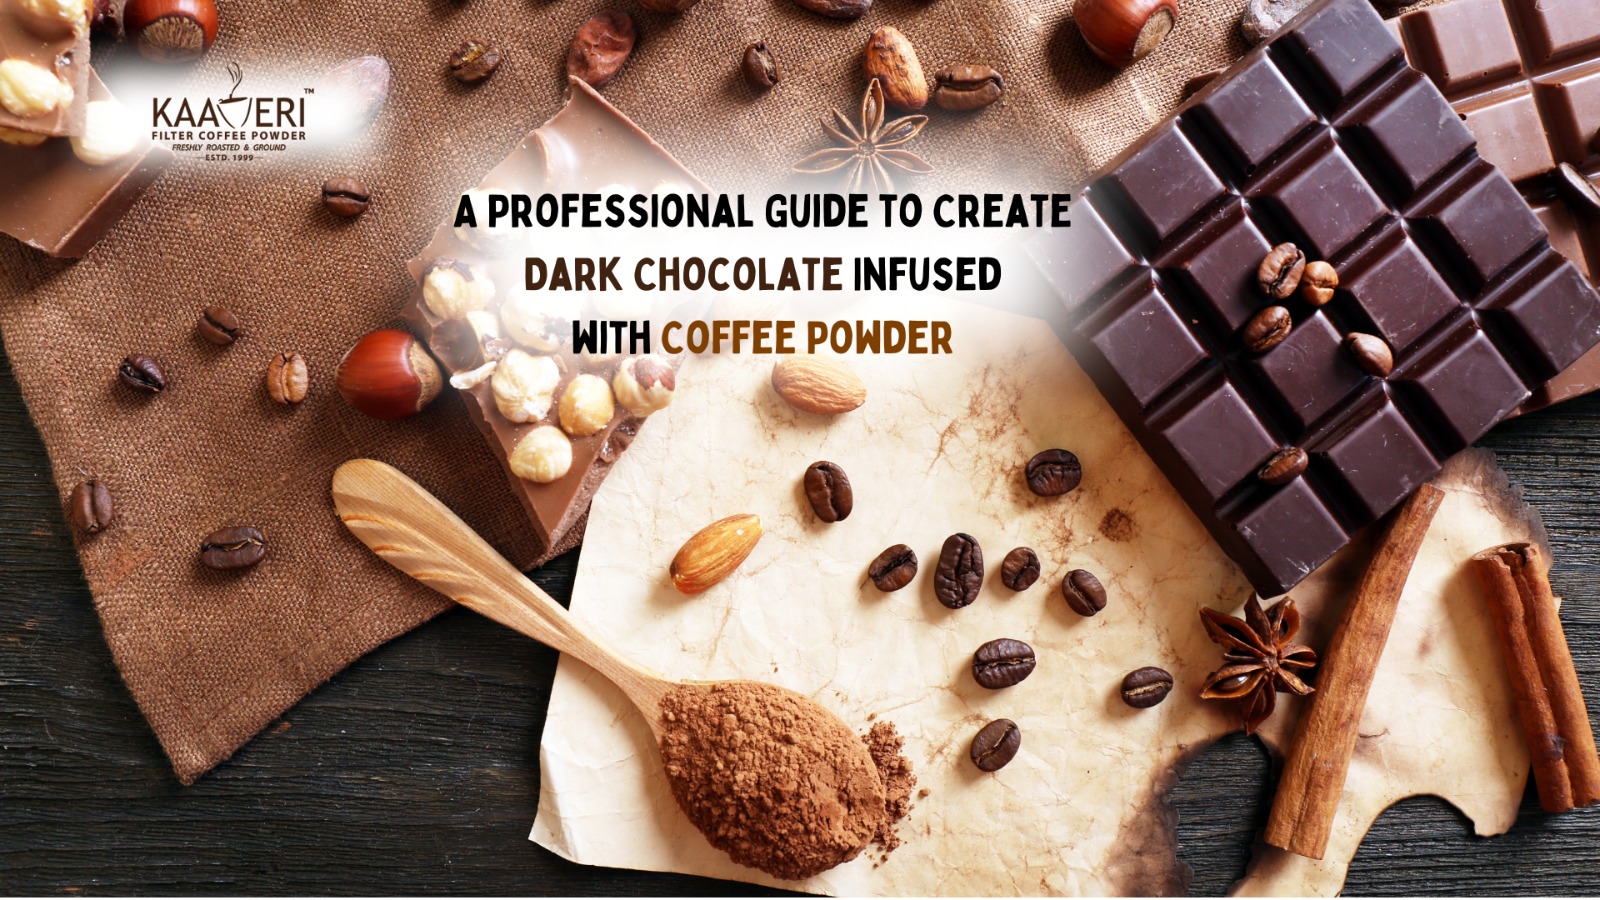 Dark chocolate with coffee powder